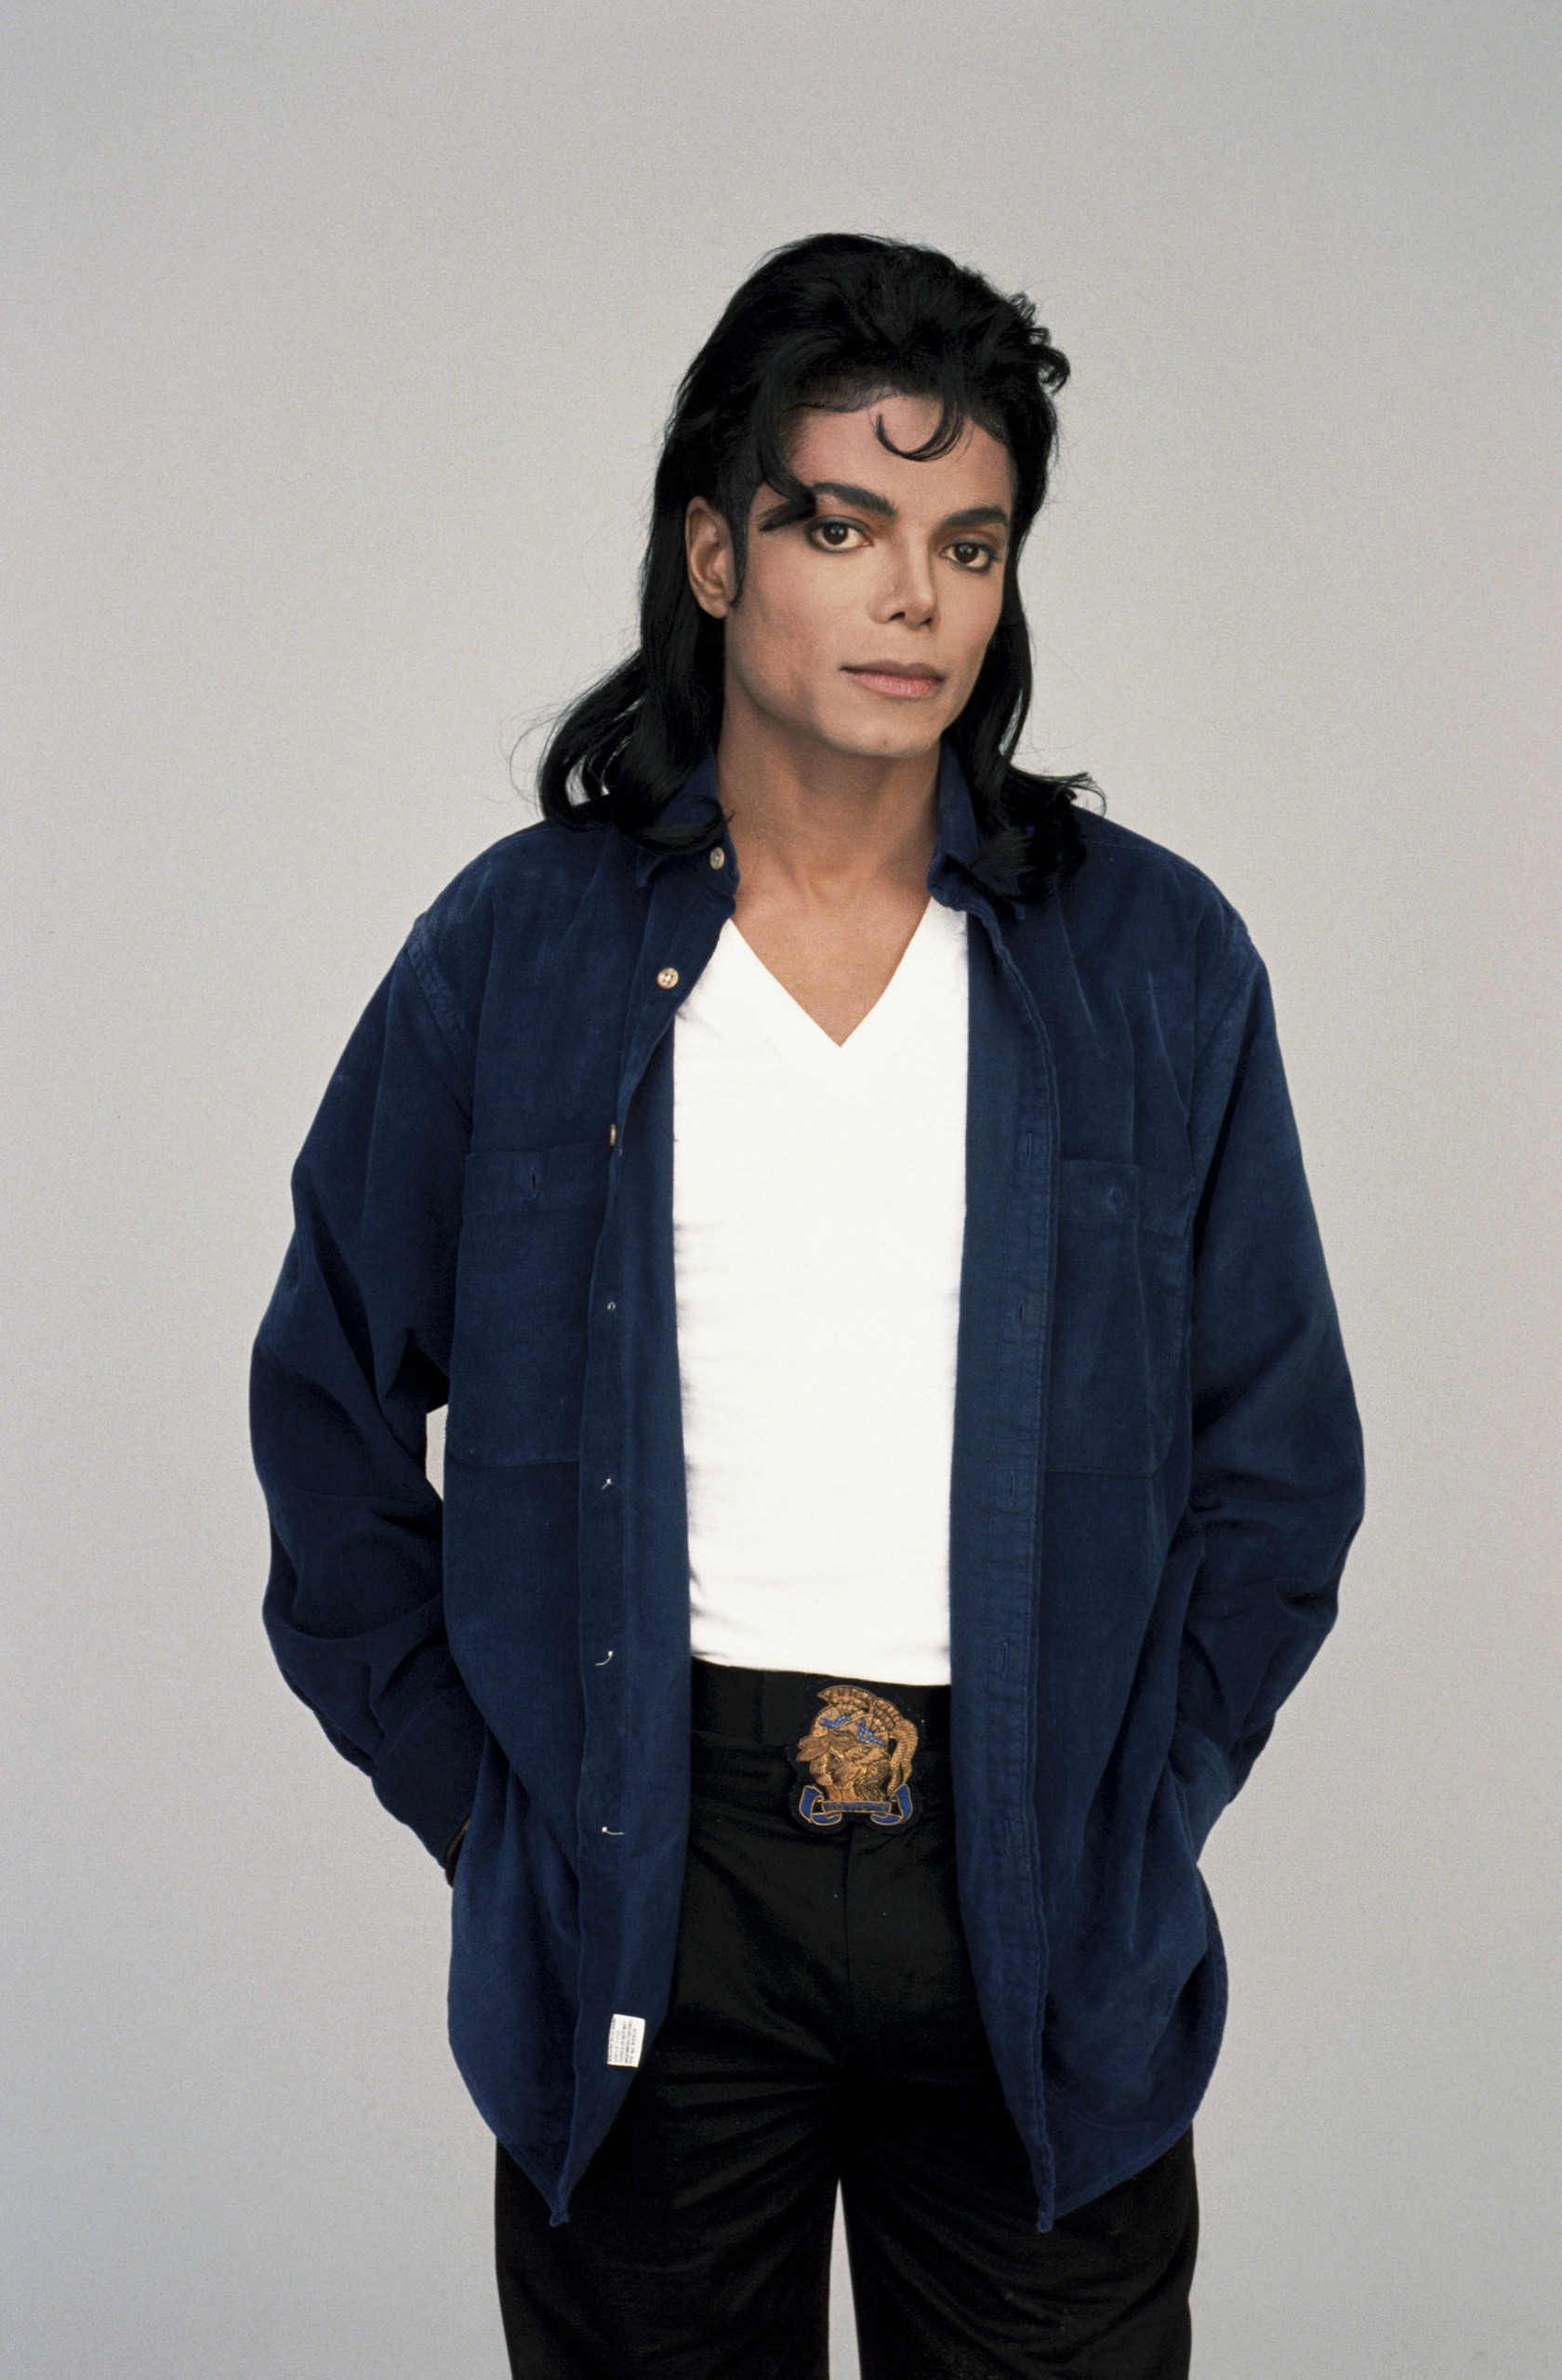 Photoshoots Hq Michael Jackson Photo 7860896 Fanpop